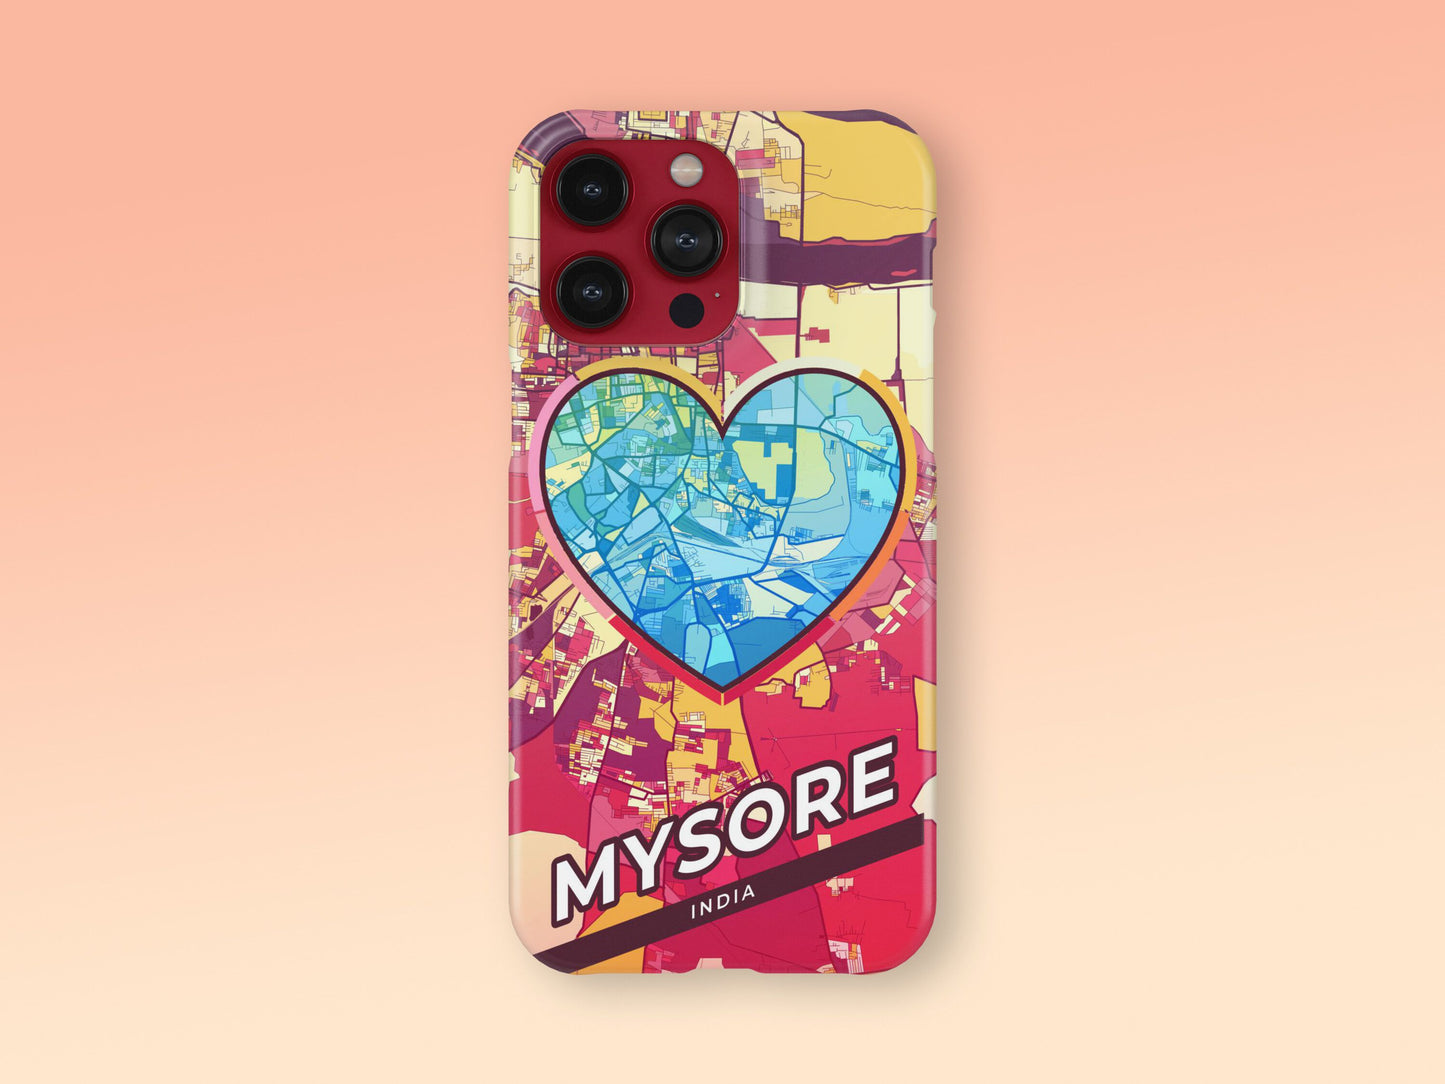 Mysore India slim phone case with colorful icon 2